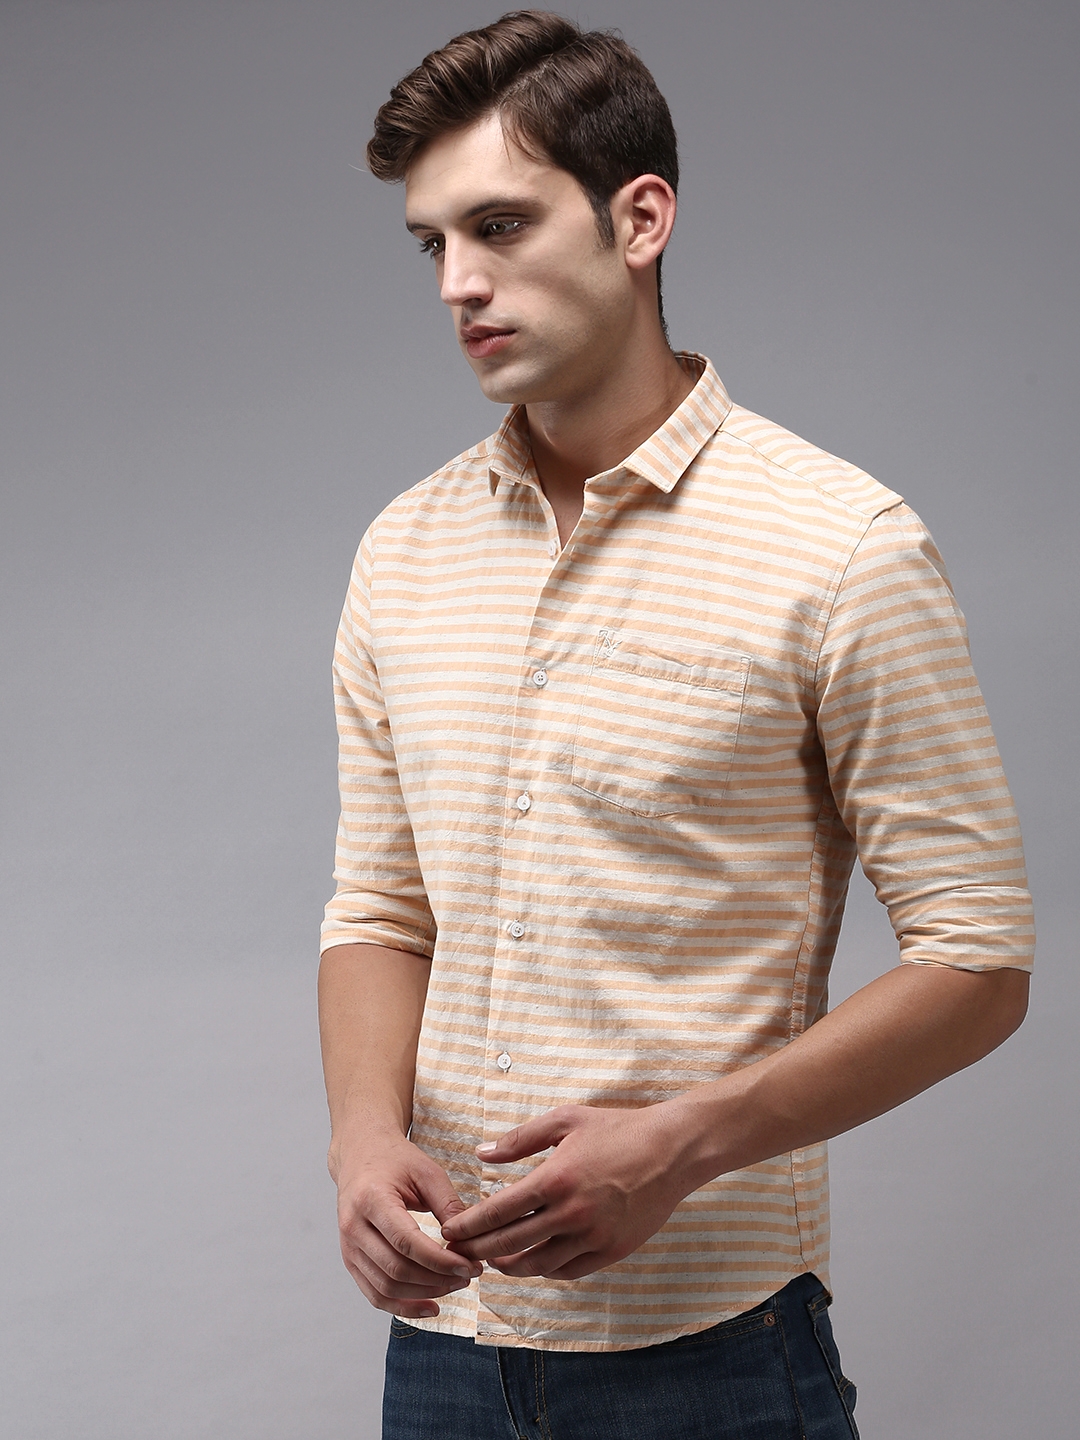 Men's Orange Cotton Striped Casual Shirts